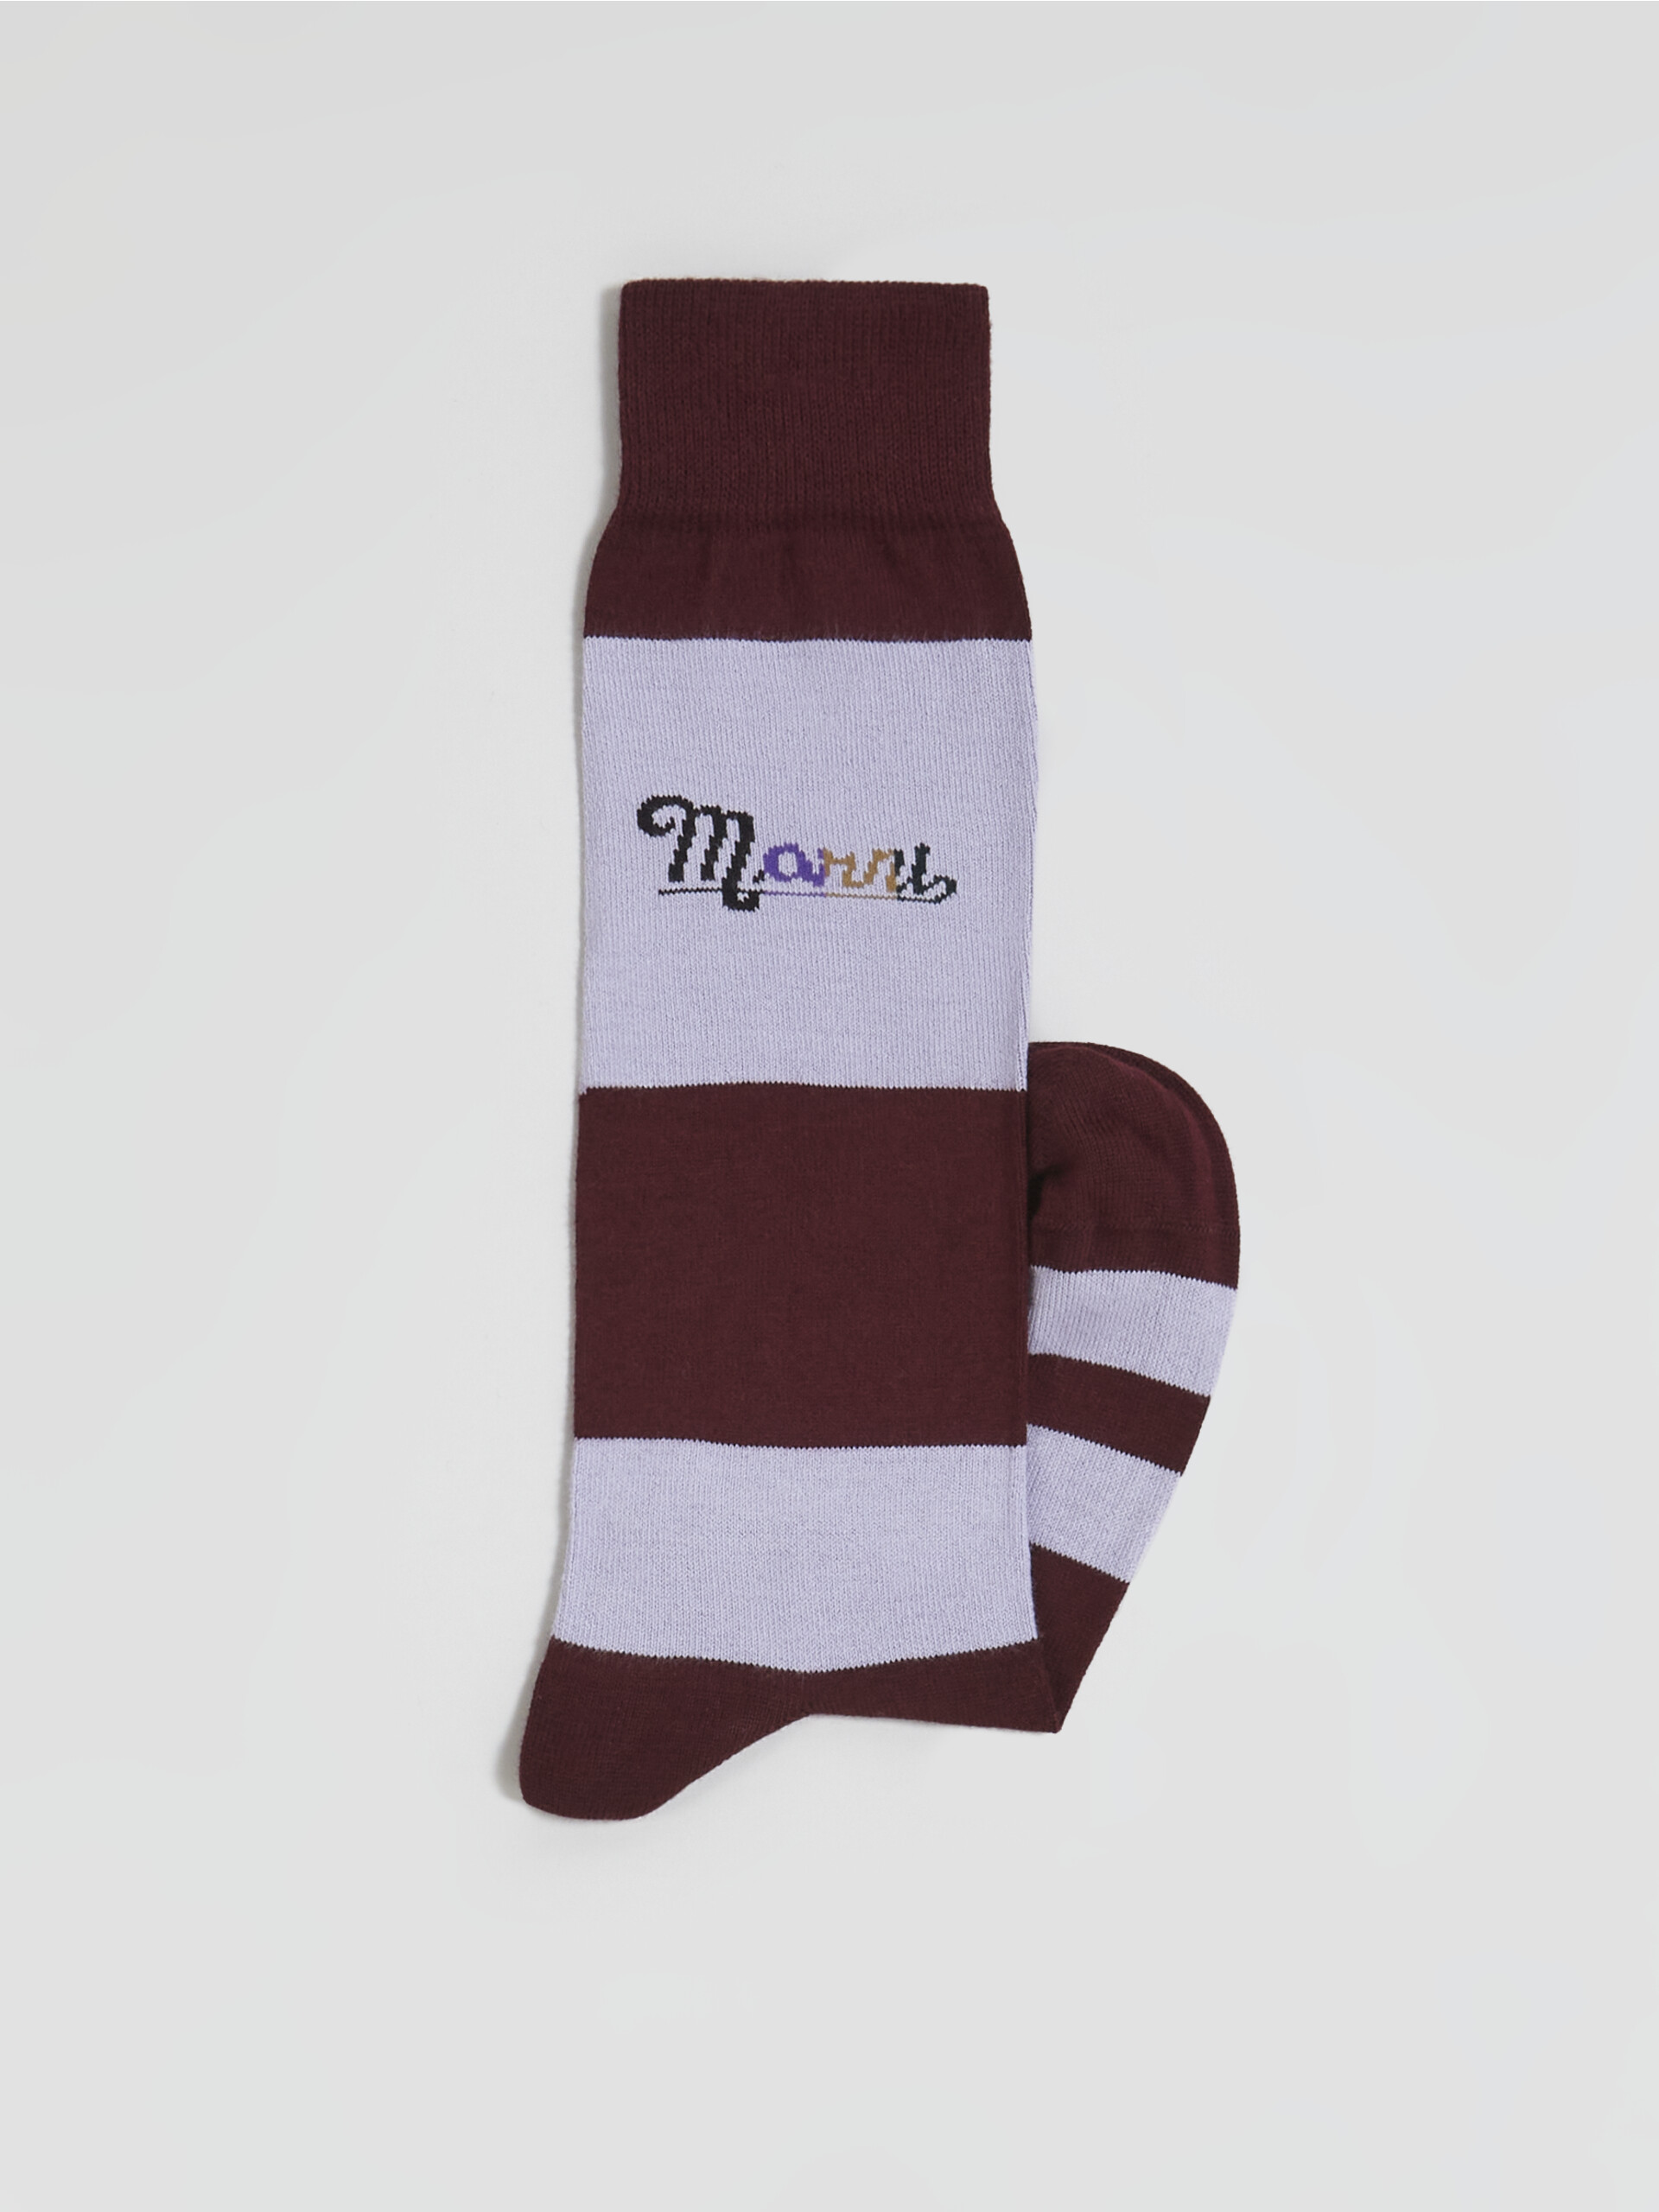 Socke aus burgunderrot-violett gestreiftem Nylon mit Regenbogen-Logo-Intarsie - Socken - Image 2